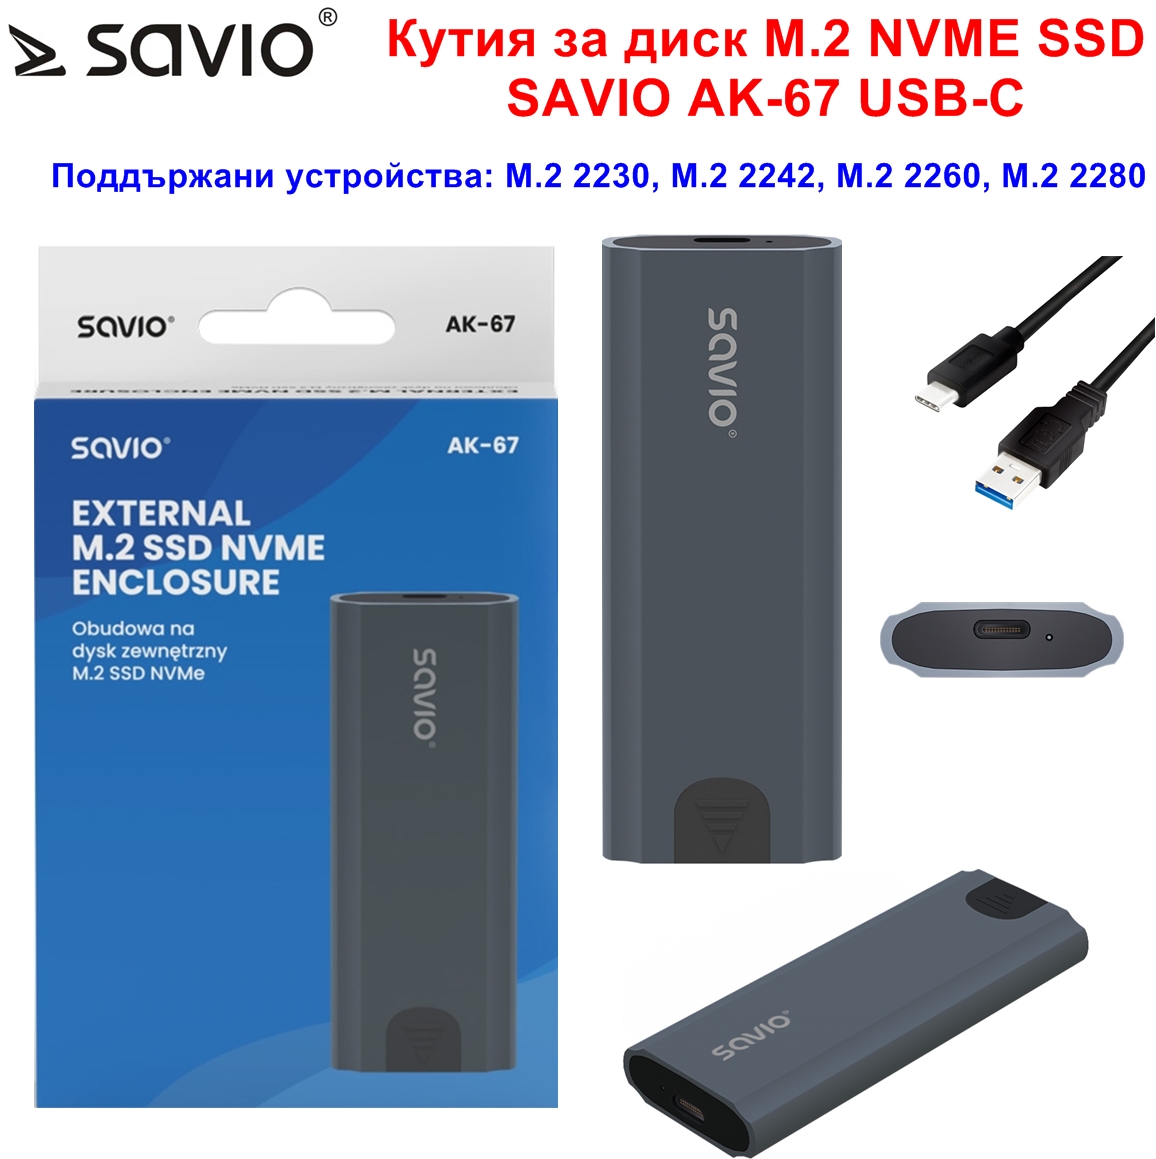 Кутия за диск M.2 NVME SSD  SAVIO AK-67 USB-C